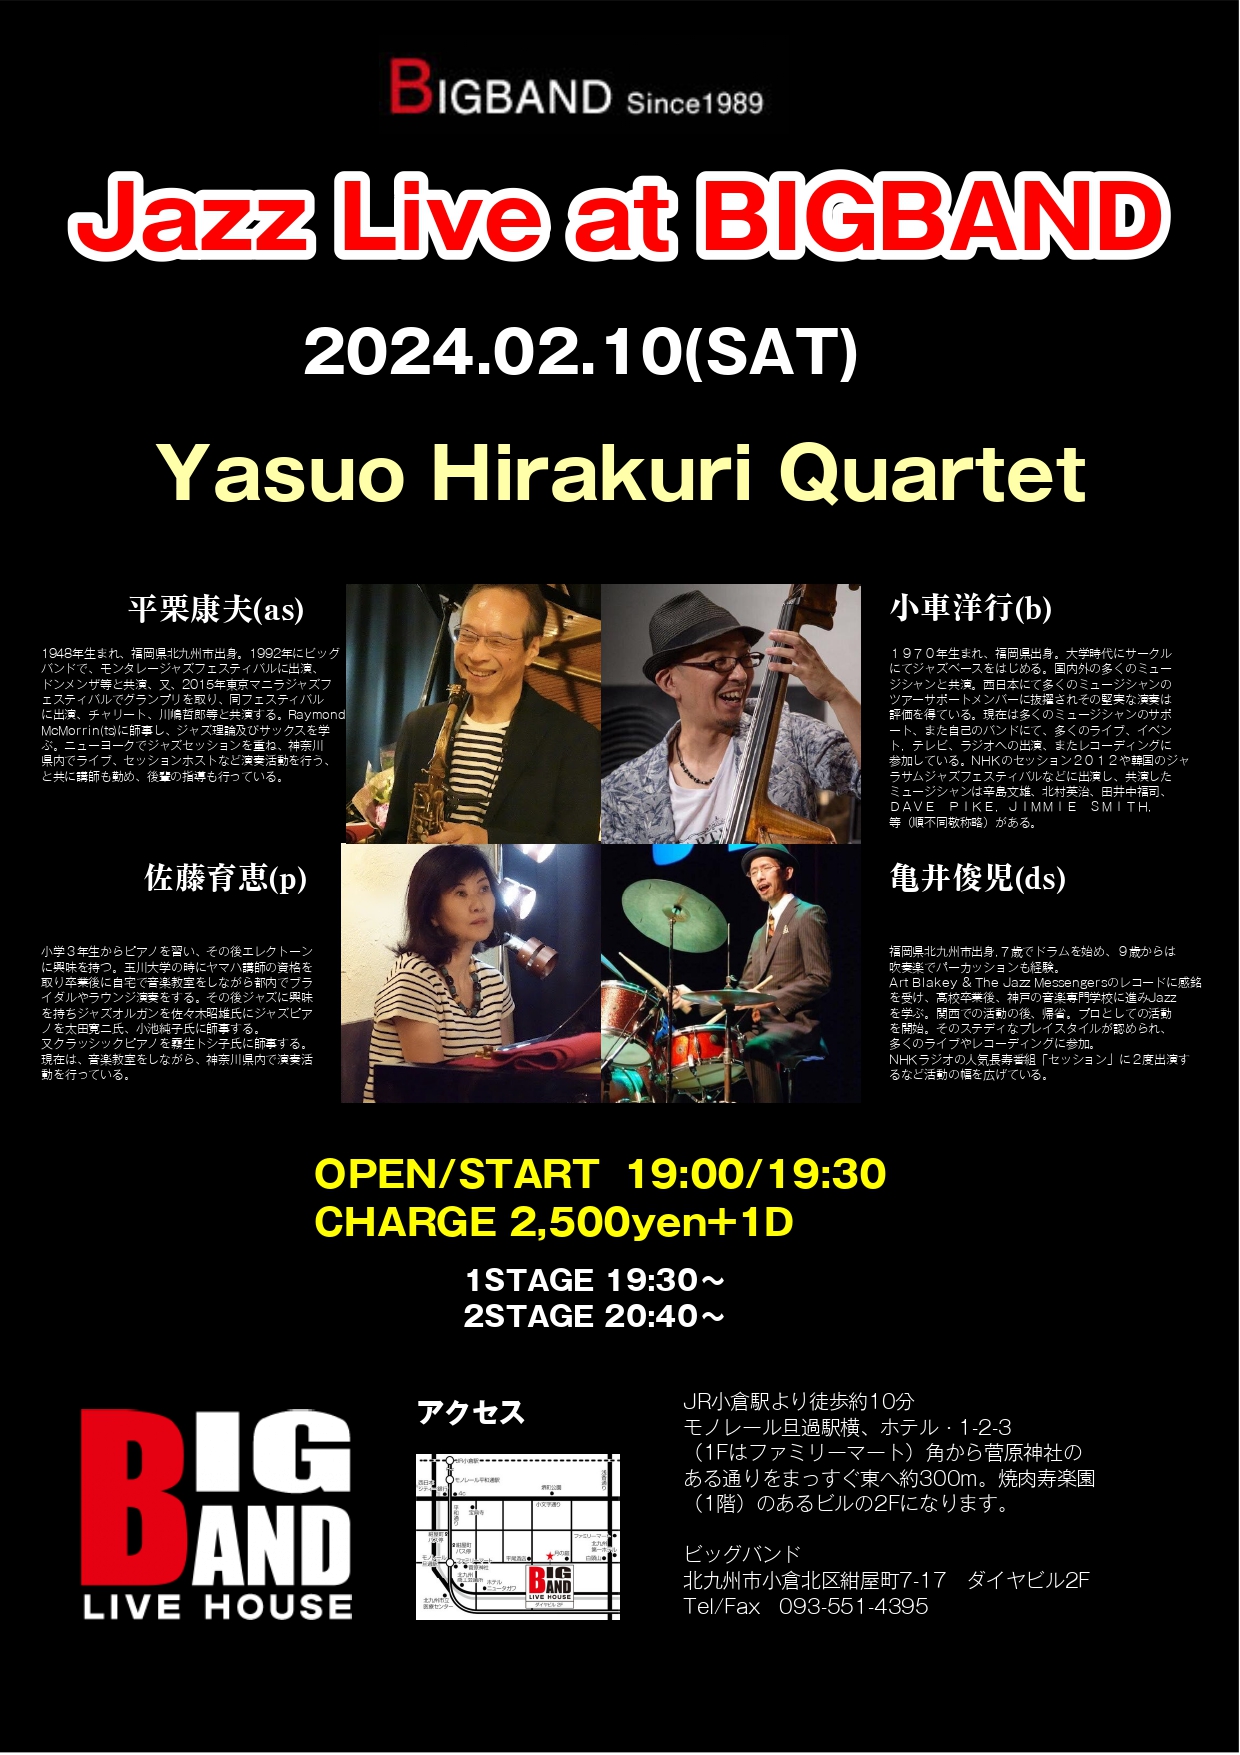 Yasuo Hirakuri Quartet